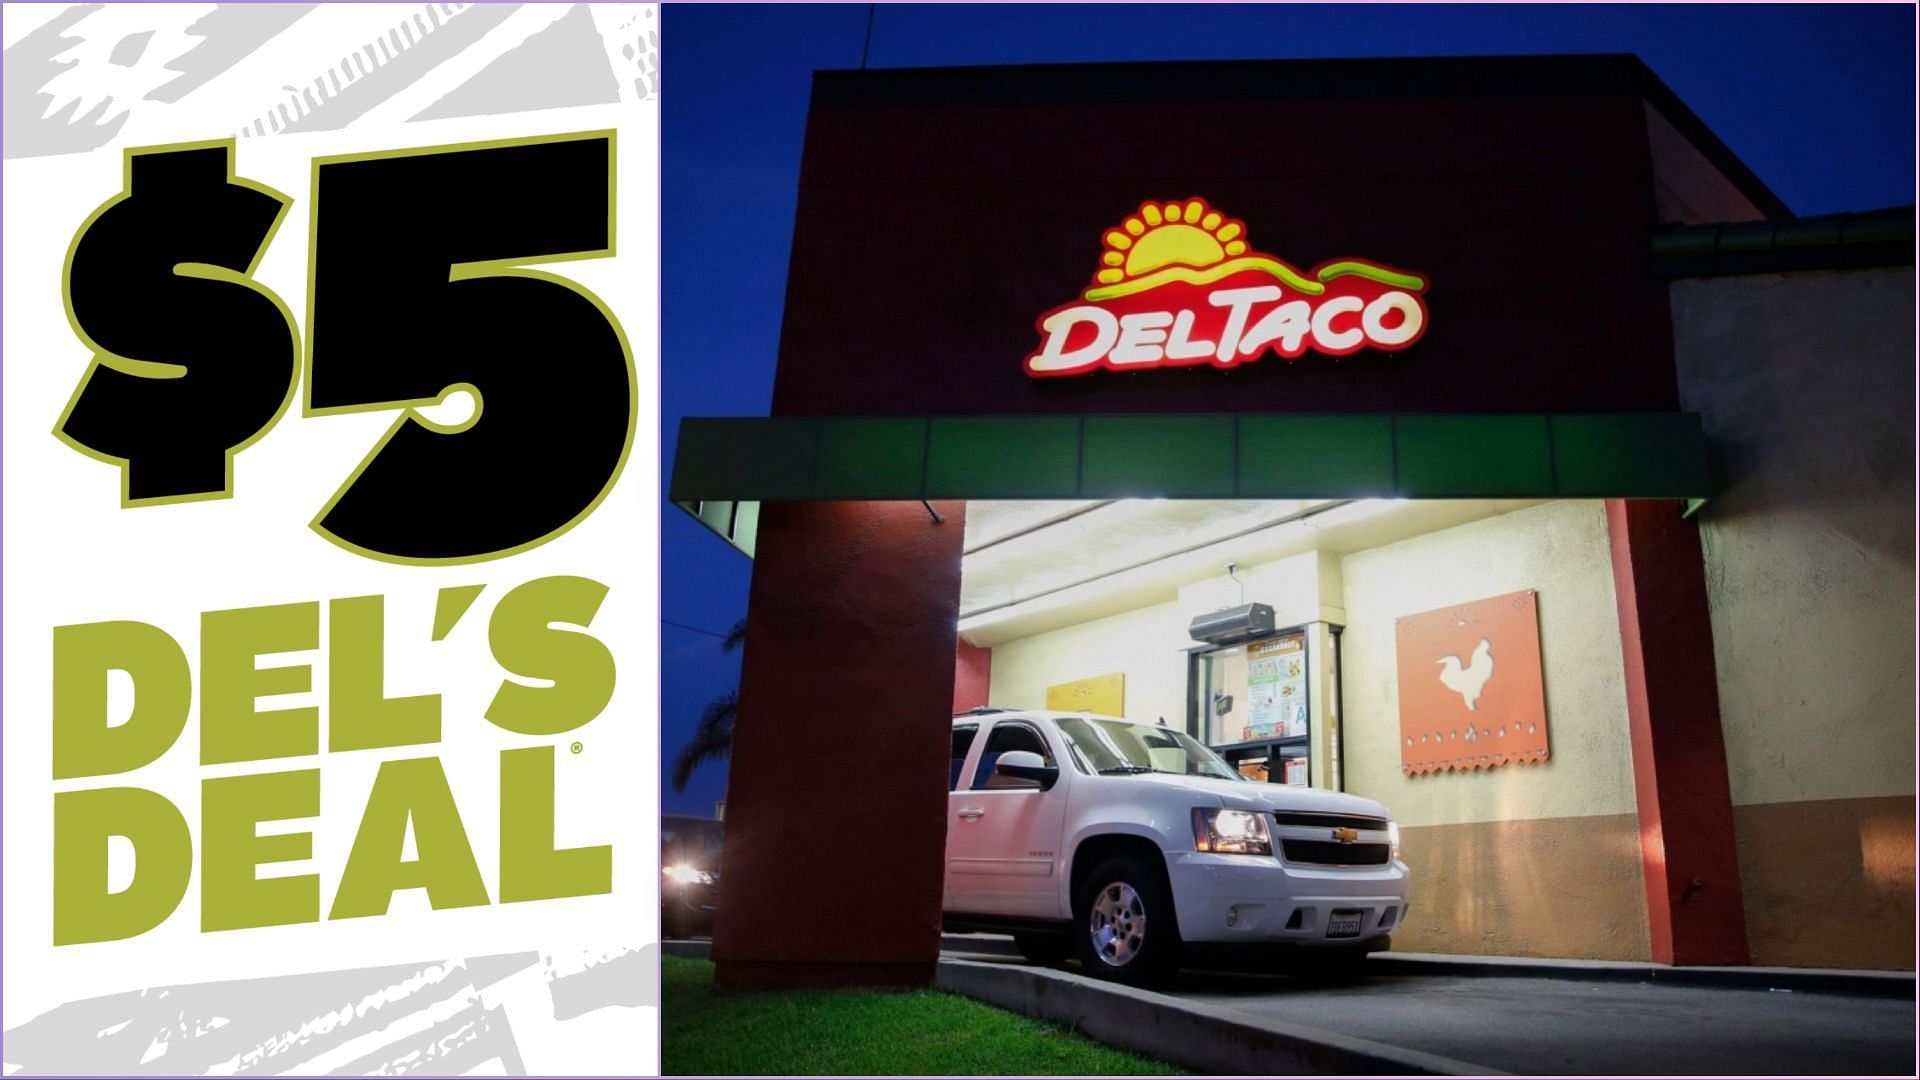 Del Taco introduces limited-time $5 Del